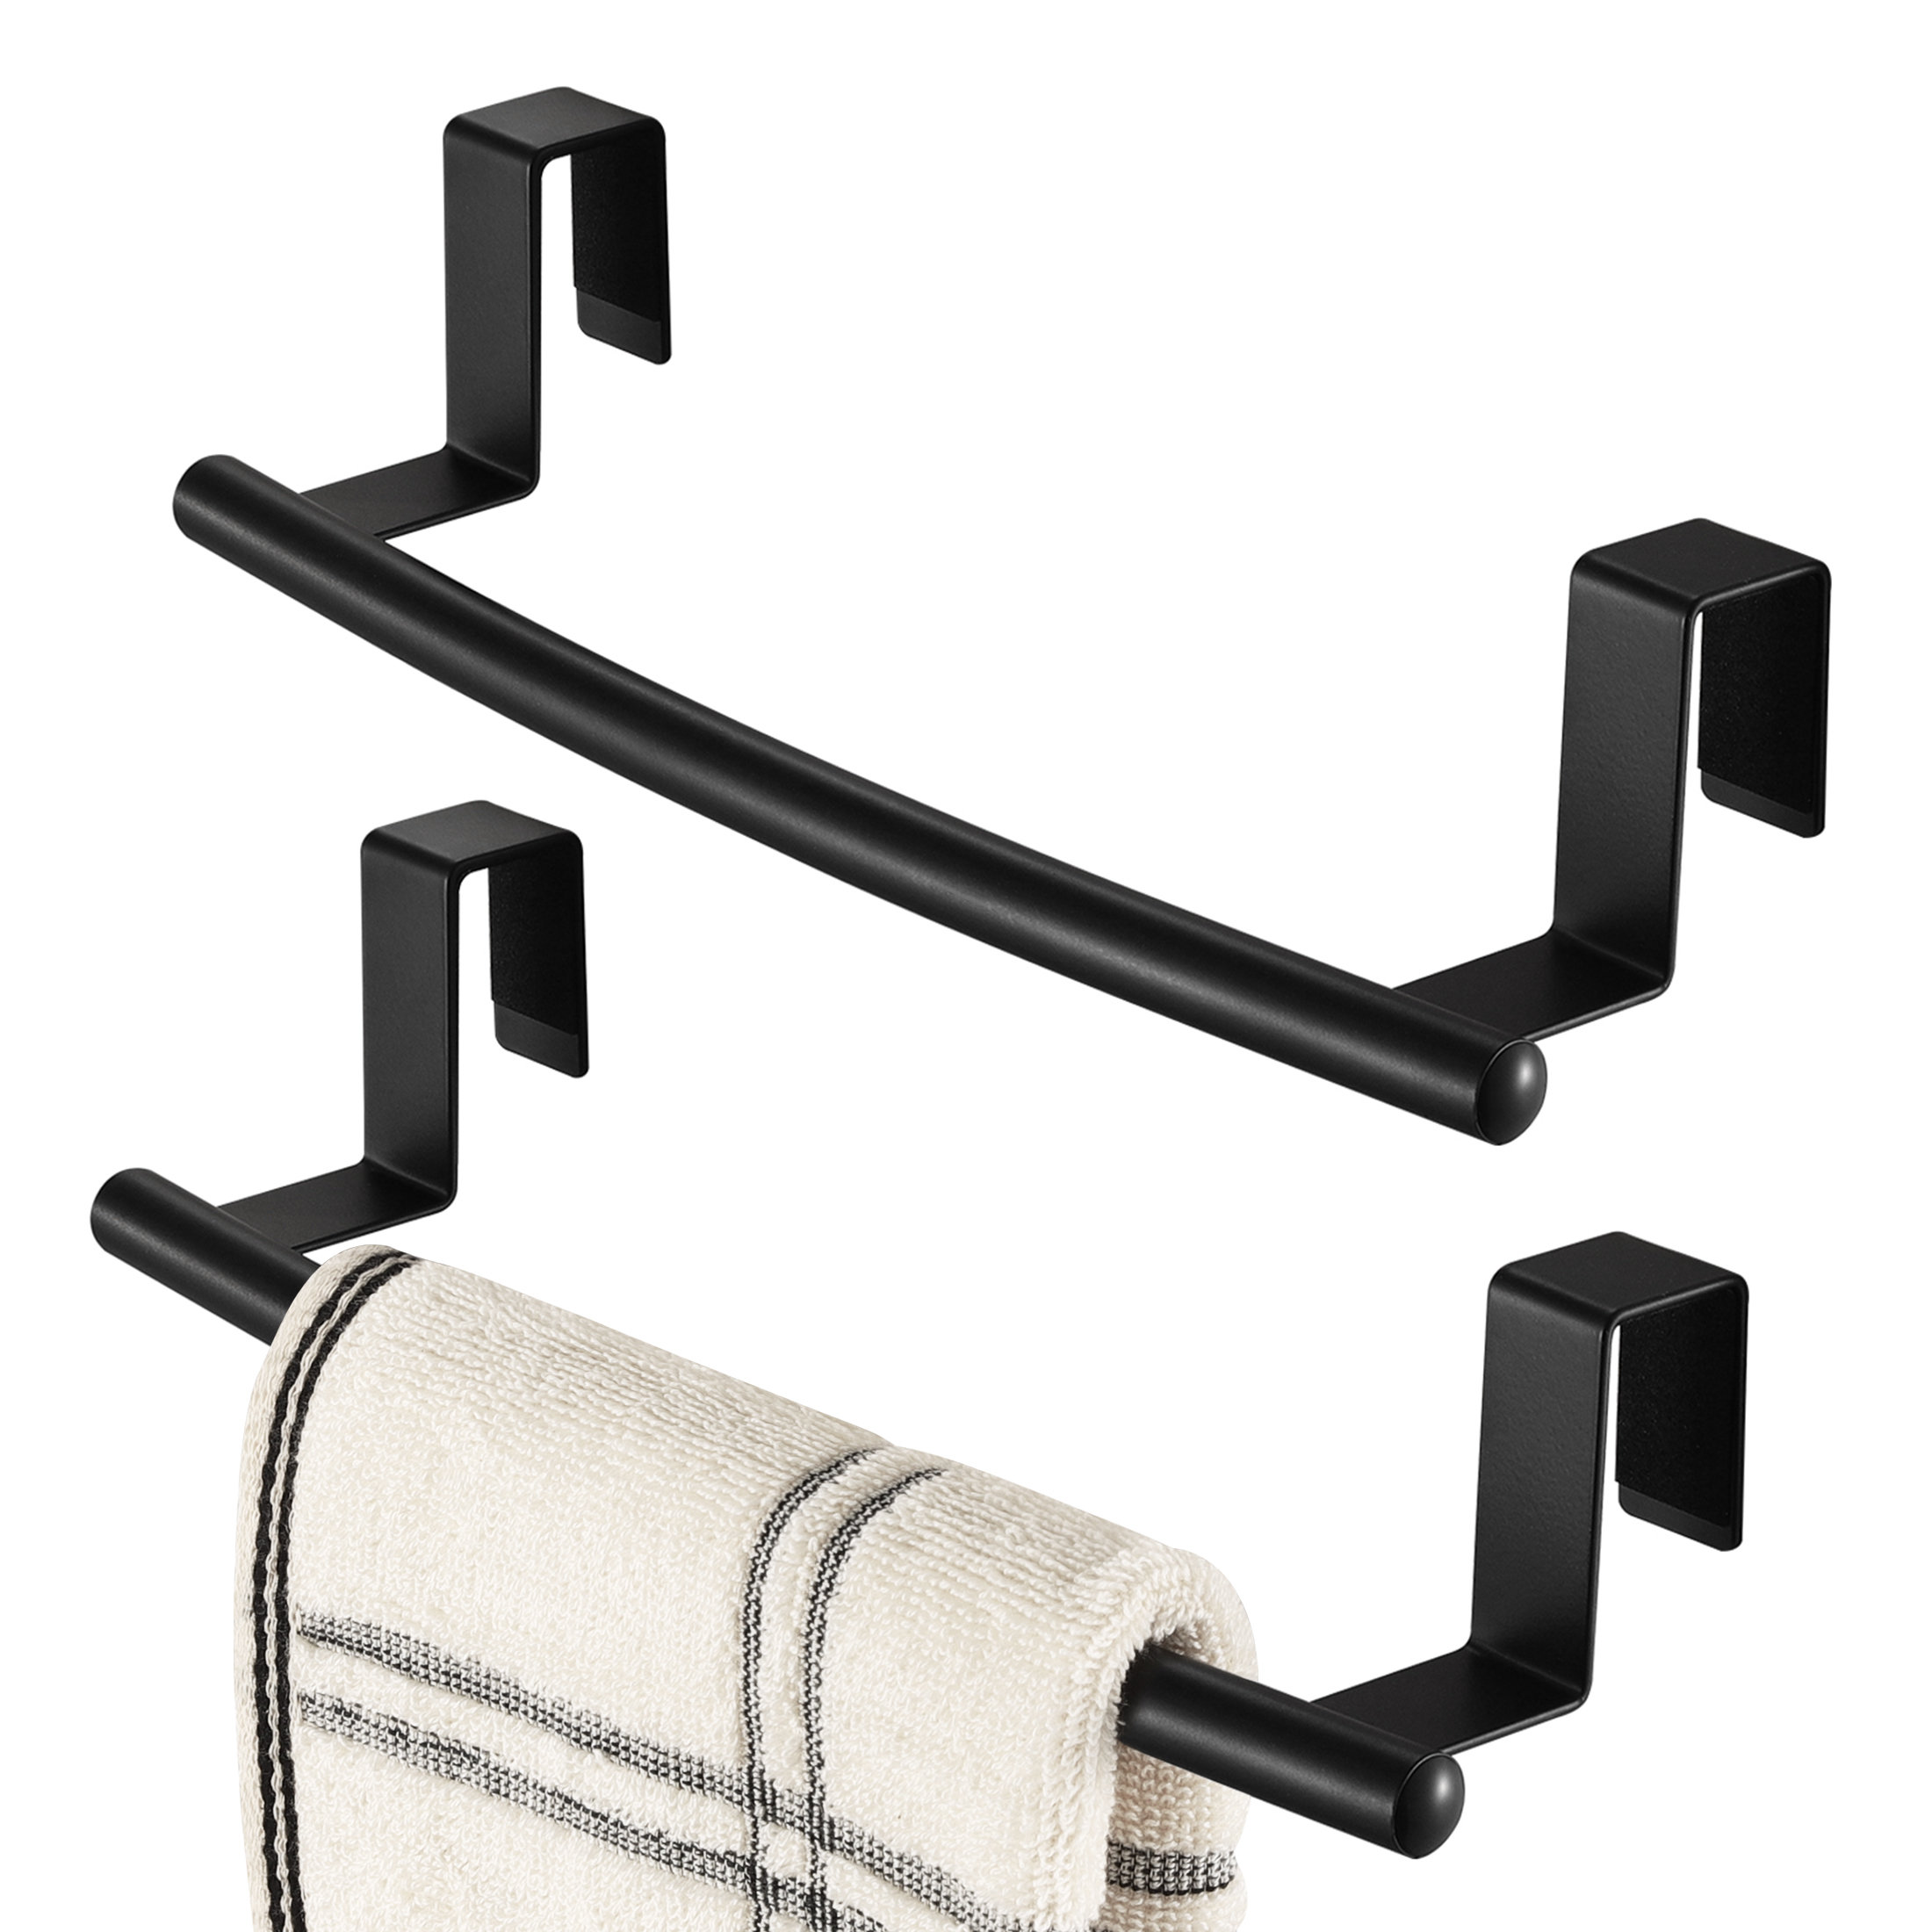 Leather Loop Hooks Household Storage & Organization Towel Holder